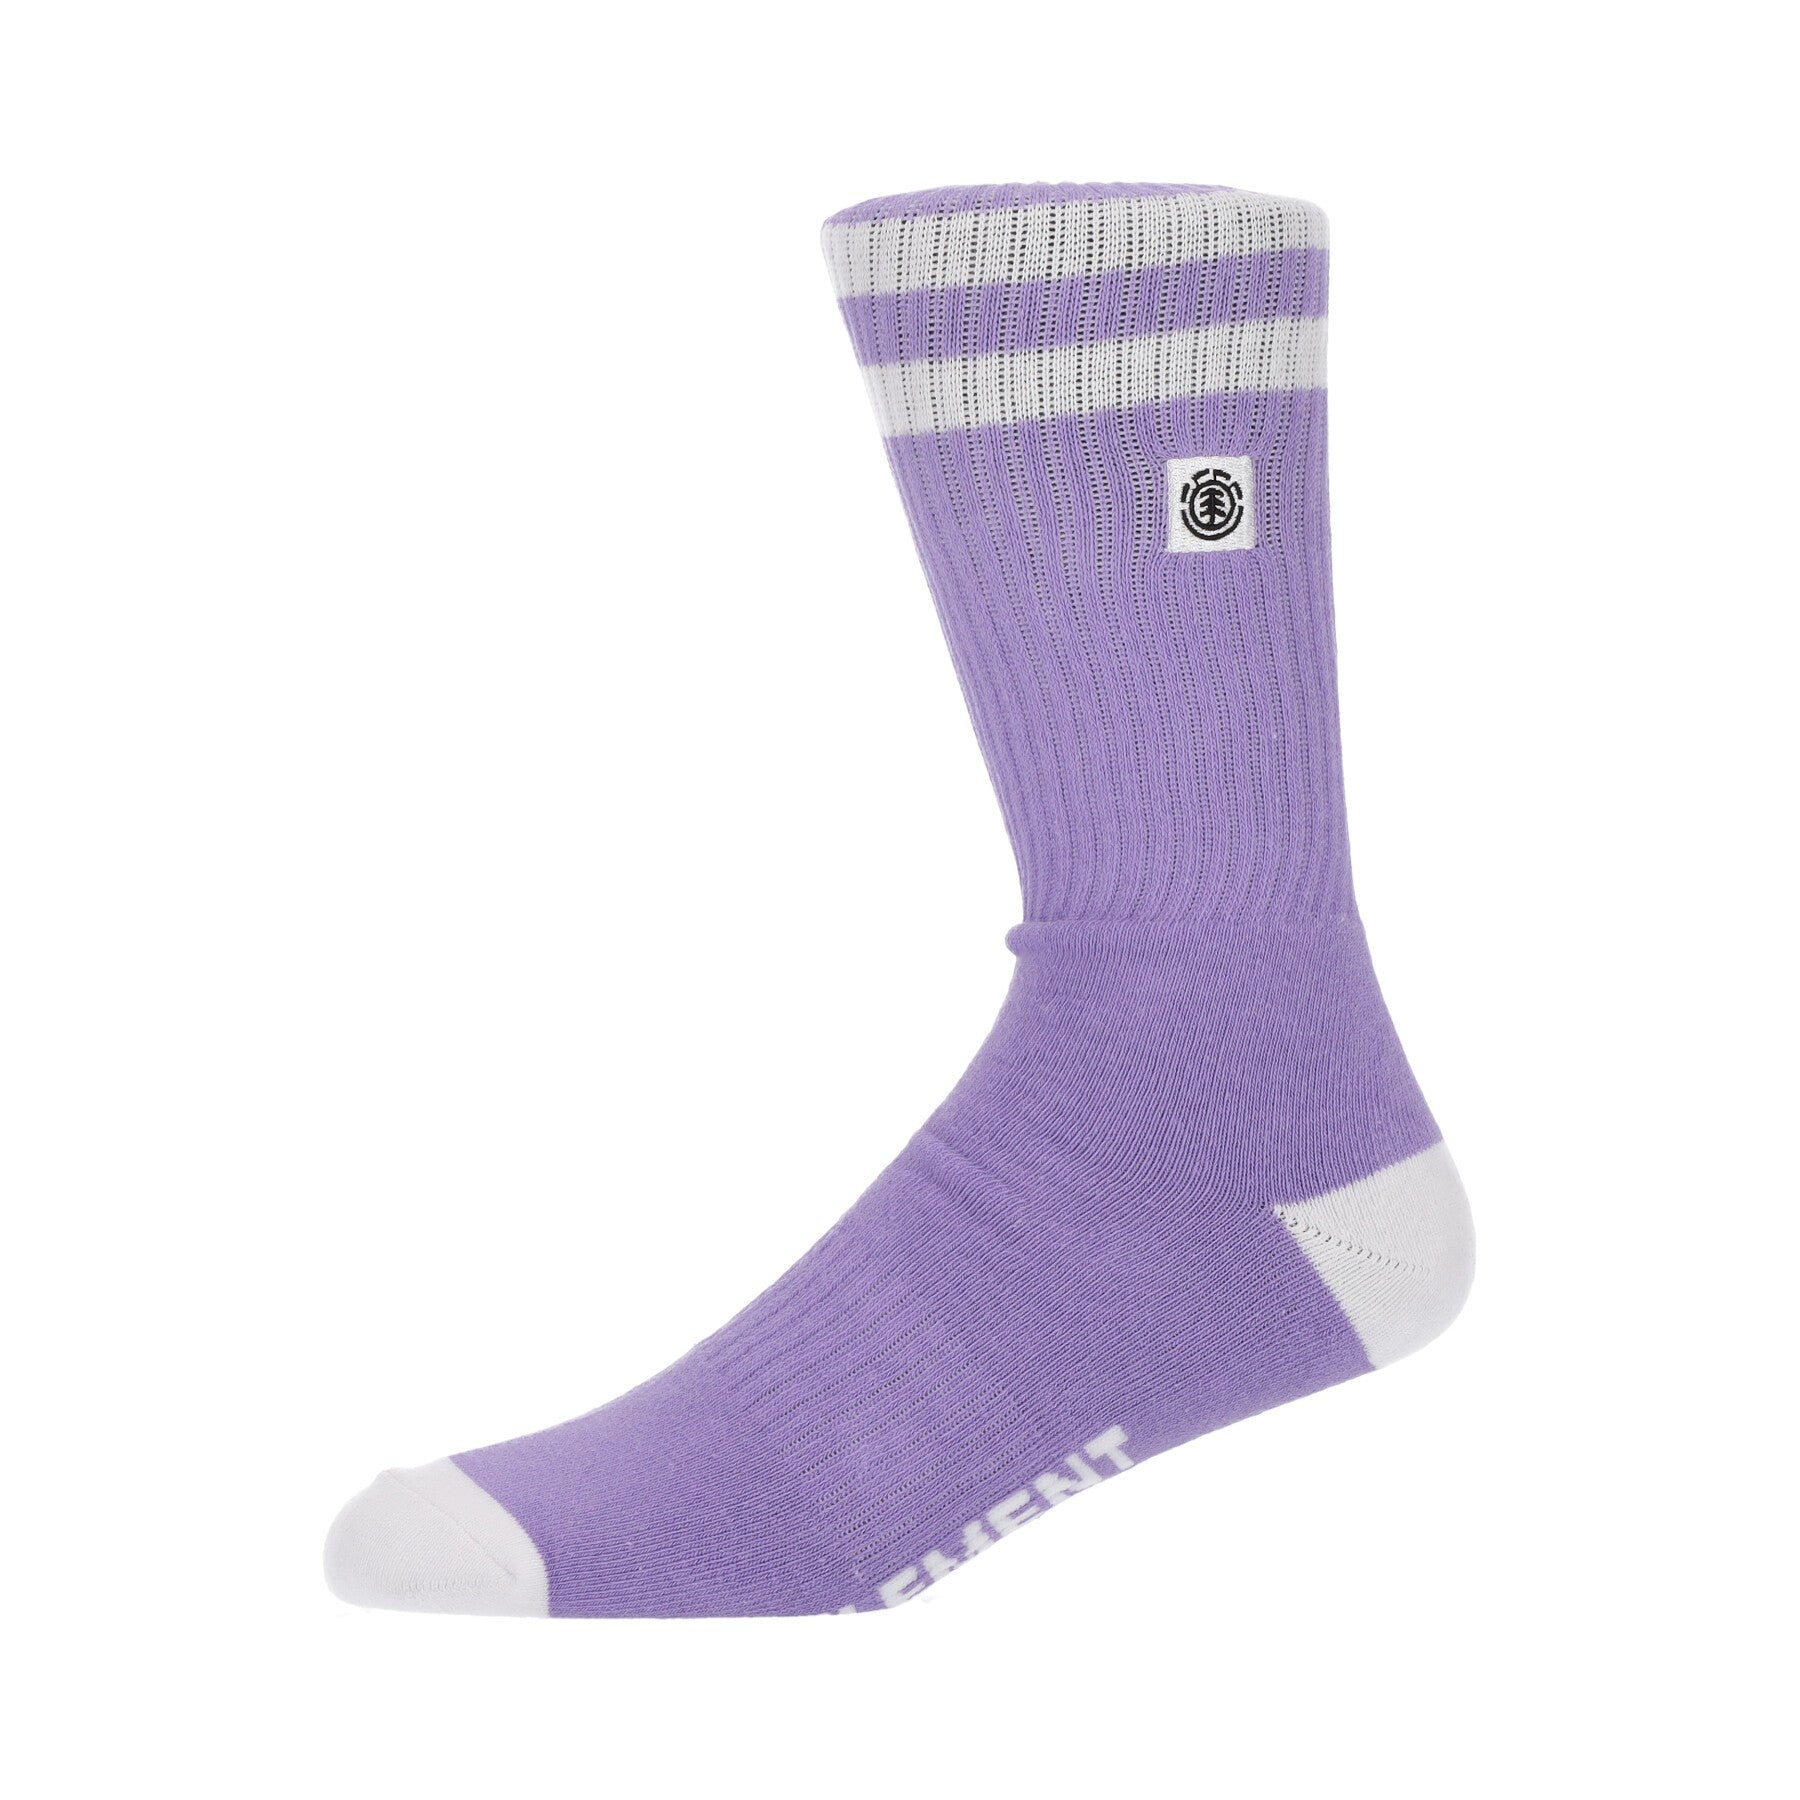 Clearsight Socks Men's Medium Sock